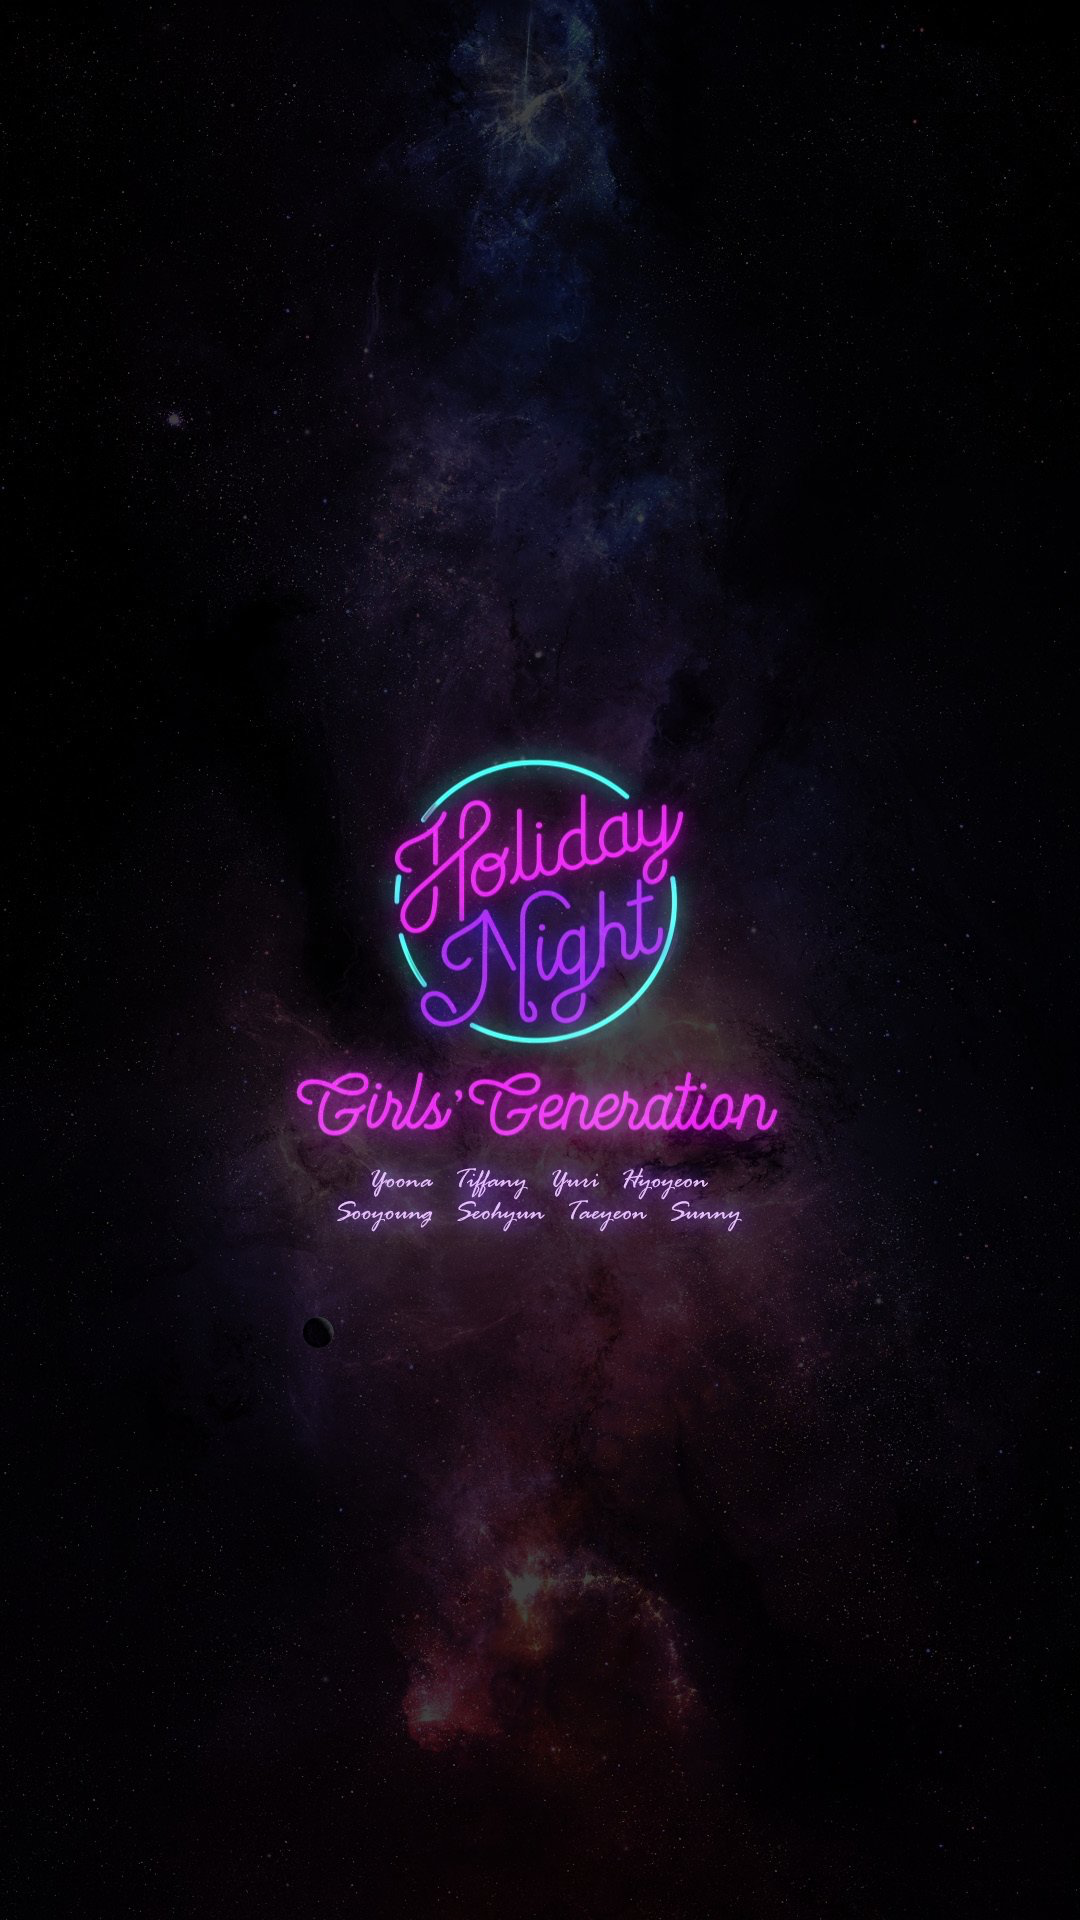 Girls Generation 6th Album Holiday Night Teaser Image